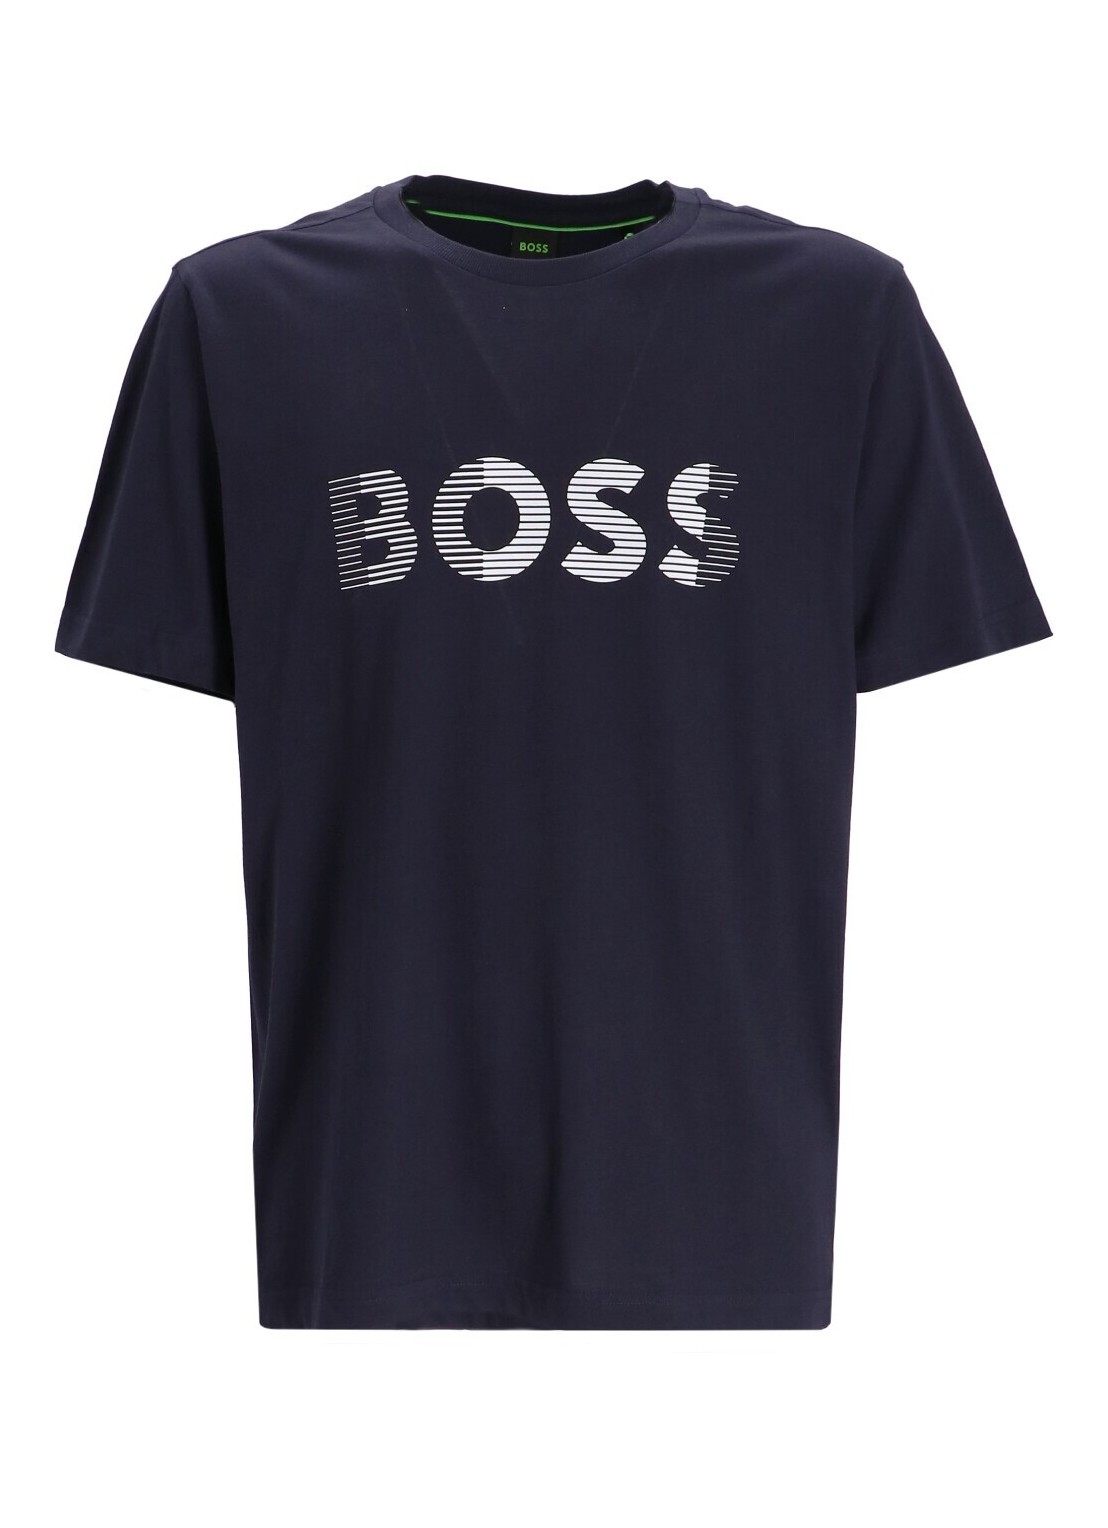 Camiseta boss t-shirt man tee 1 50494106 402 talla XXL
 